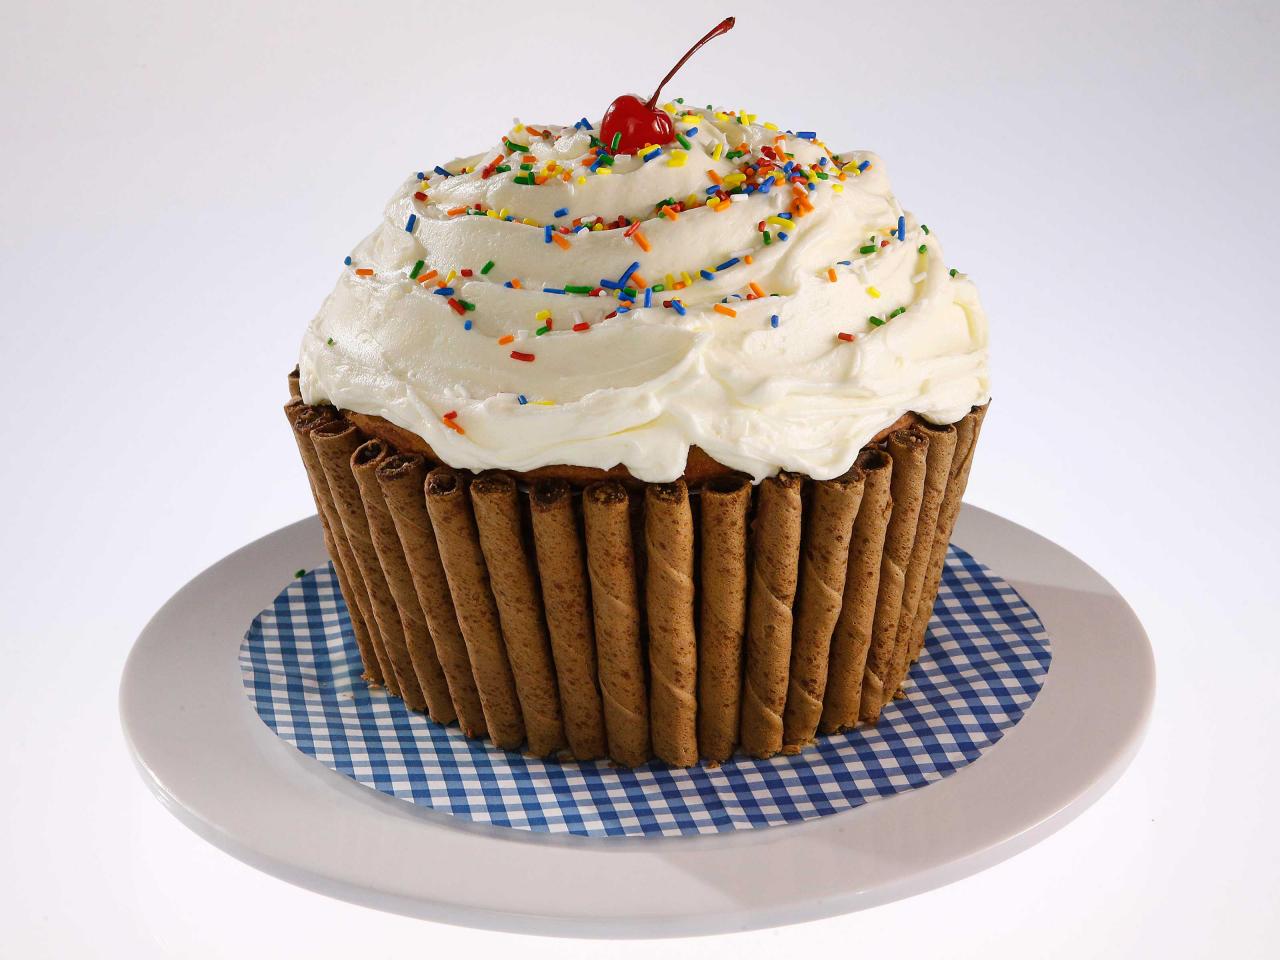 https://food.fnr.sndimg.com/content/dam/images/food/fullset/2016/5/5/0/SI0101_Big-Cupcake-Cake_s4x3.jpg.rend.hgtvcom.1280.960.suffix/1464898940464.jpeg